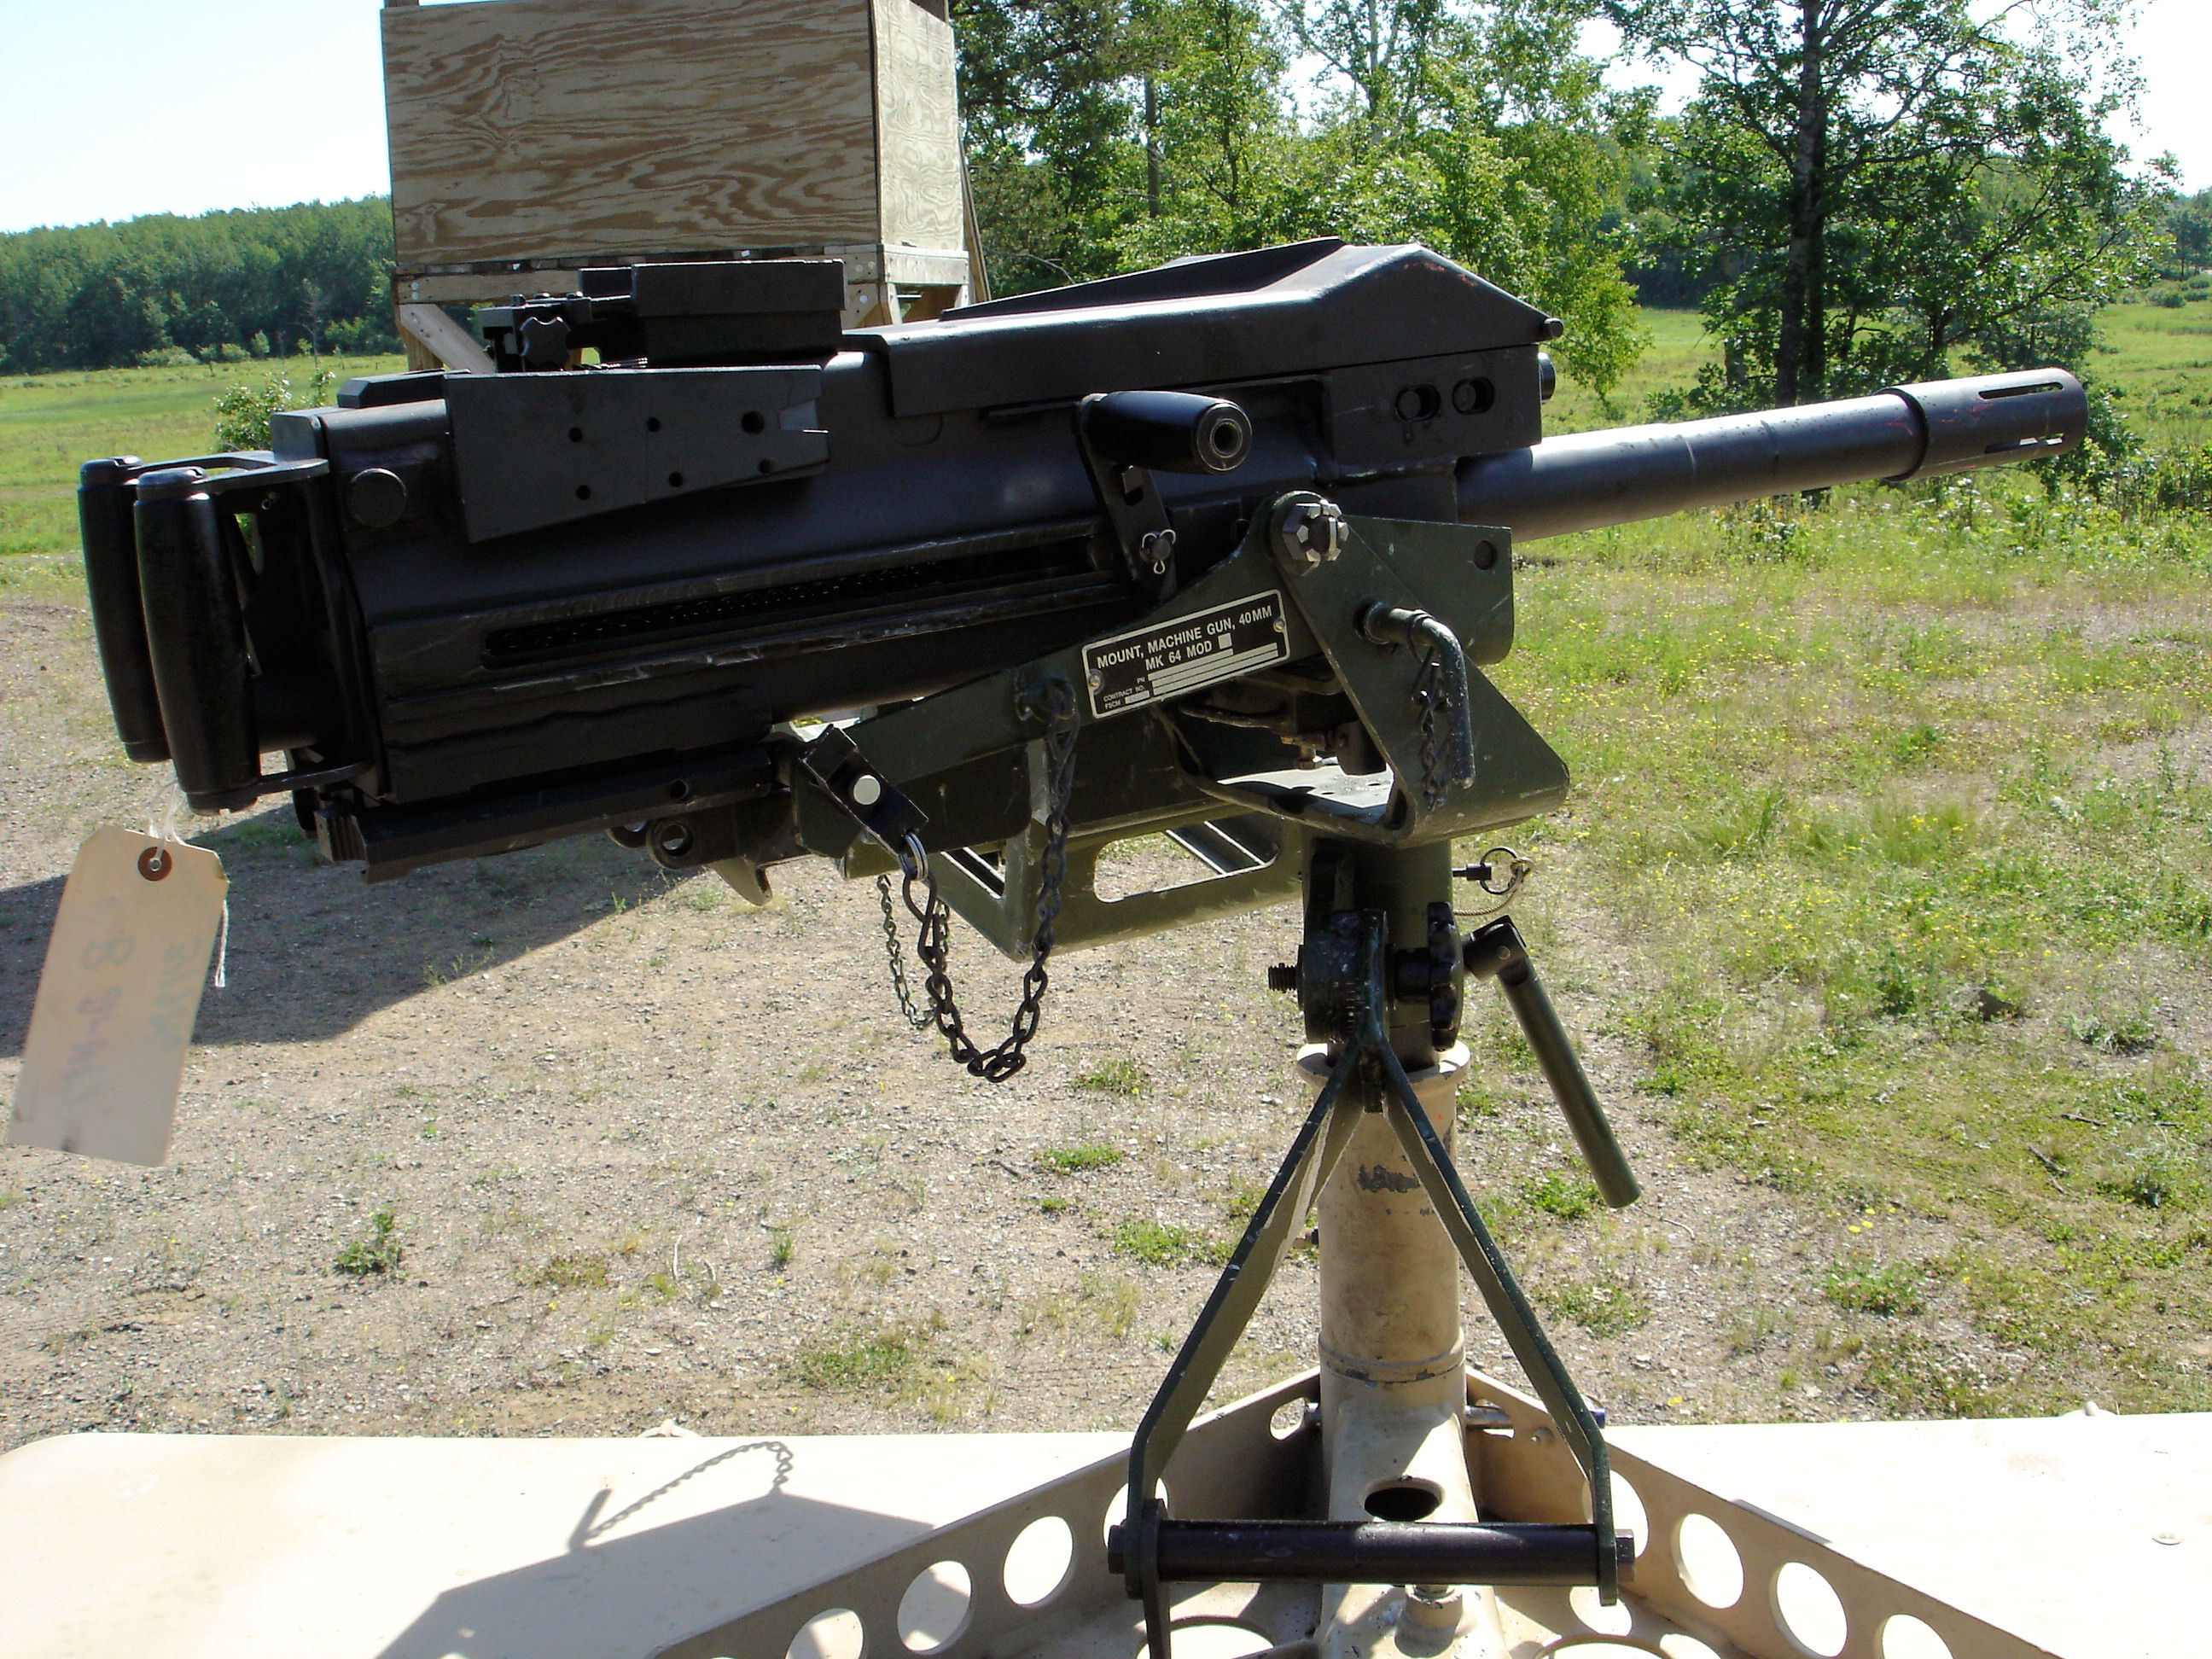 HQ Mk 19 Grenade Launcher Wallpapers | File 1328.83Kb